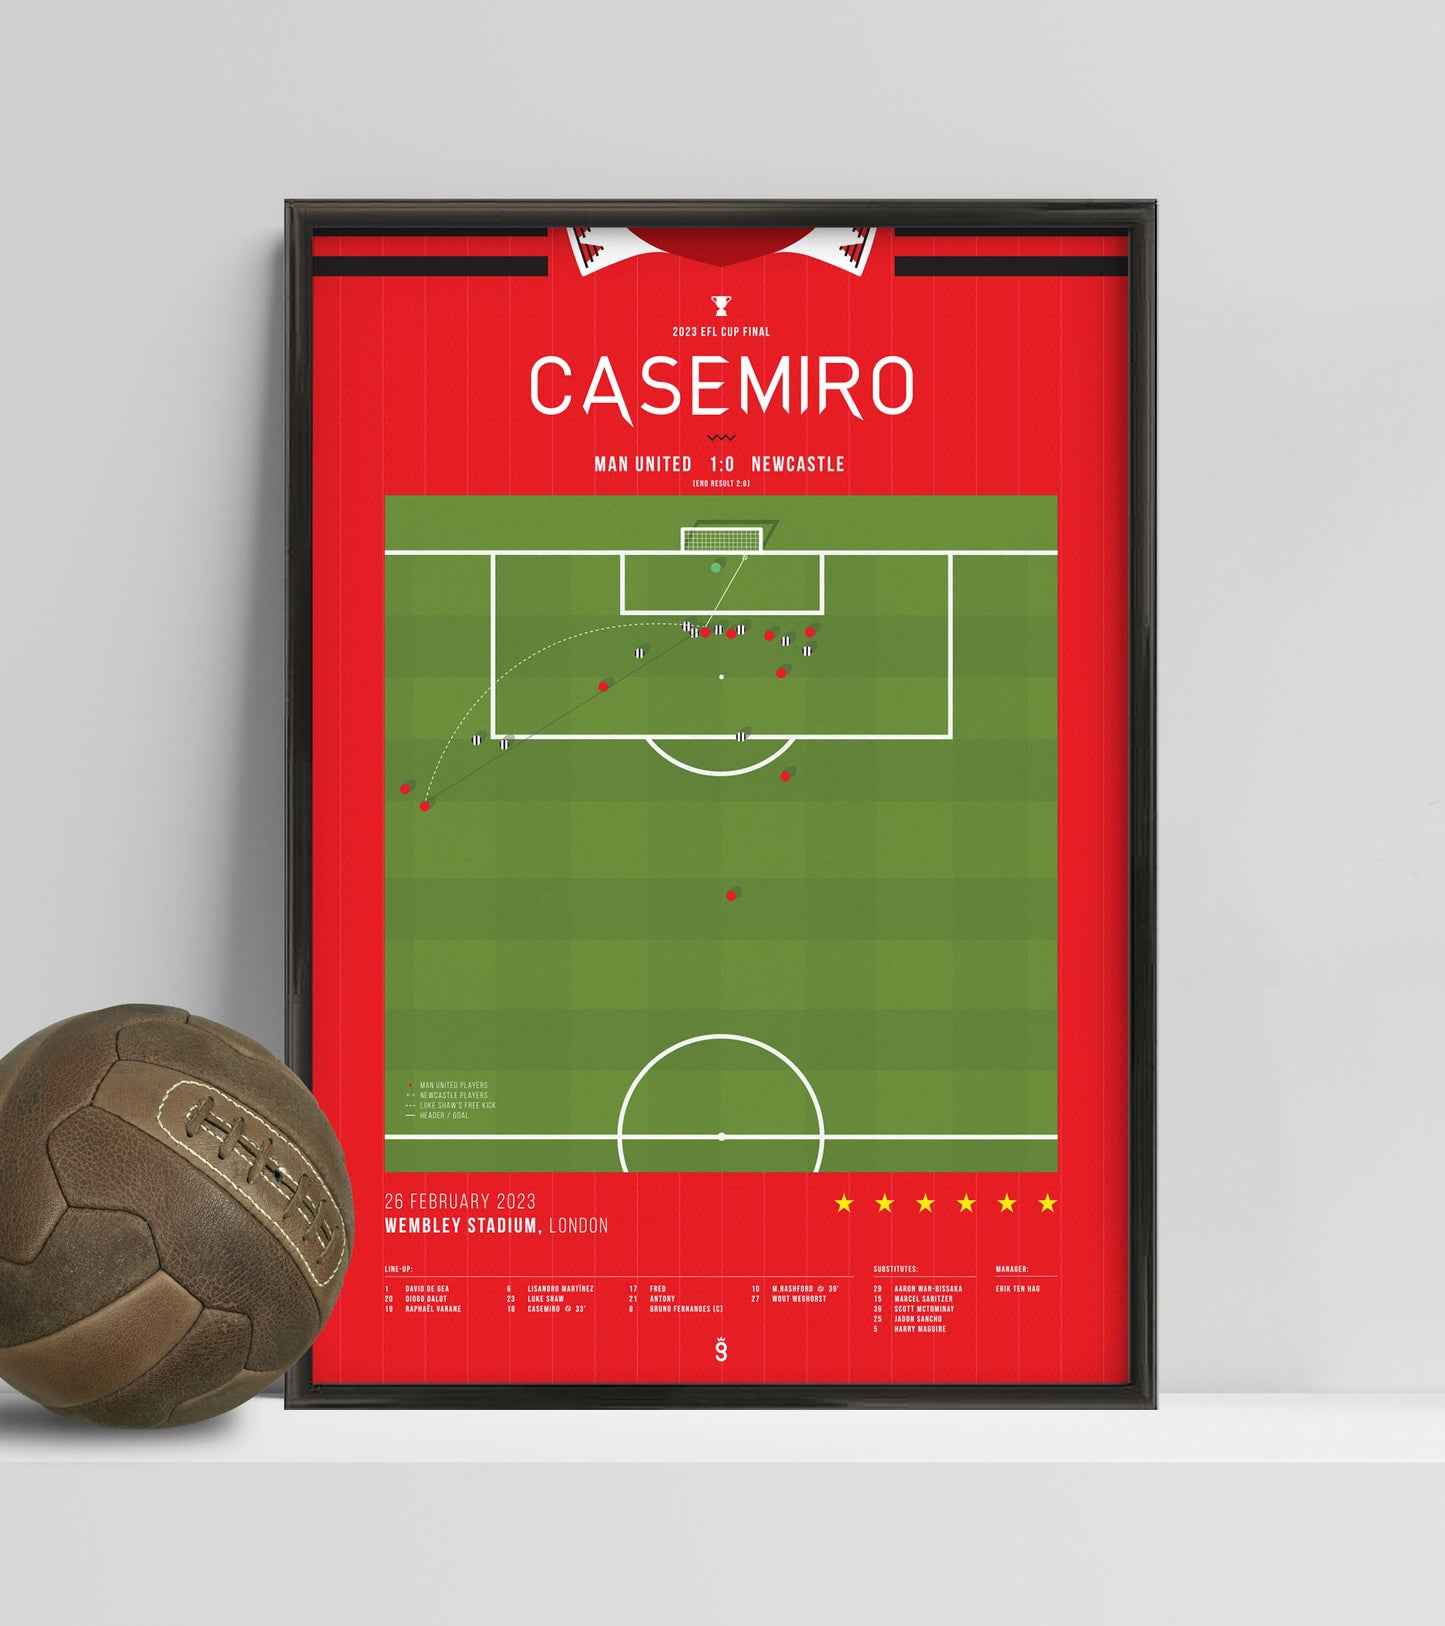 Casemiro headed the opening goal in EFL Cup final